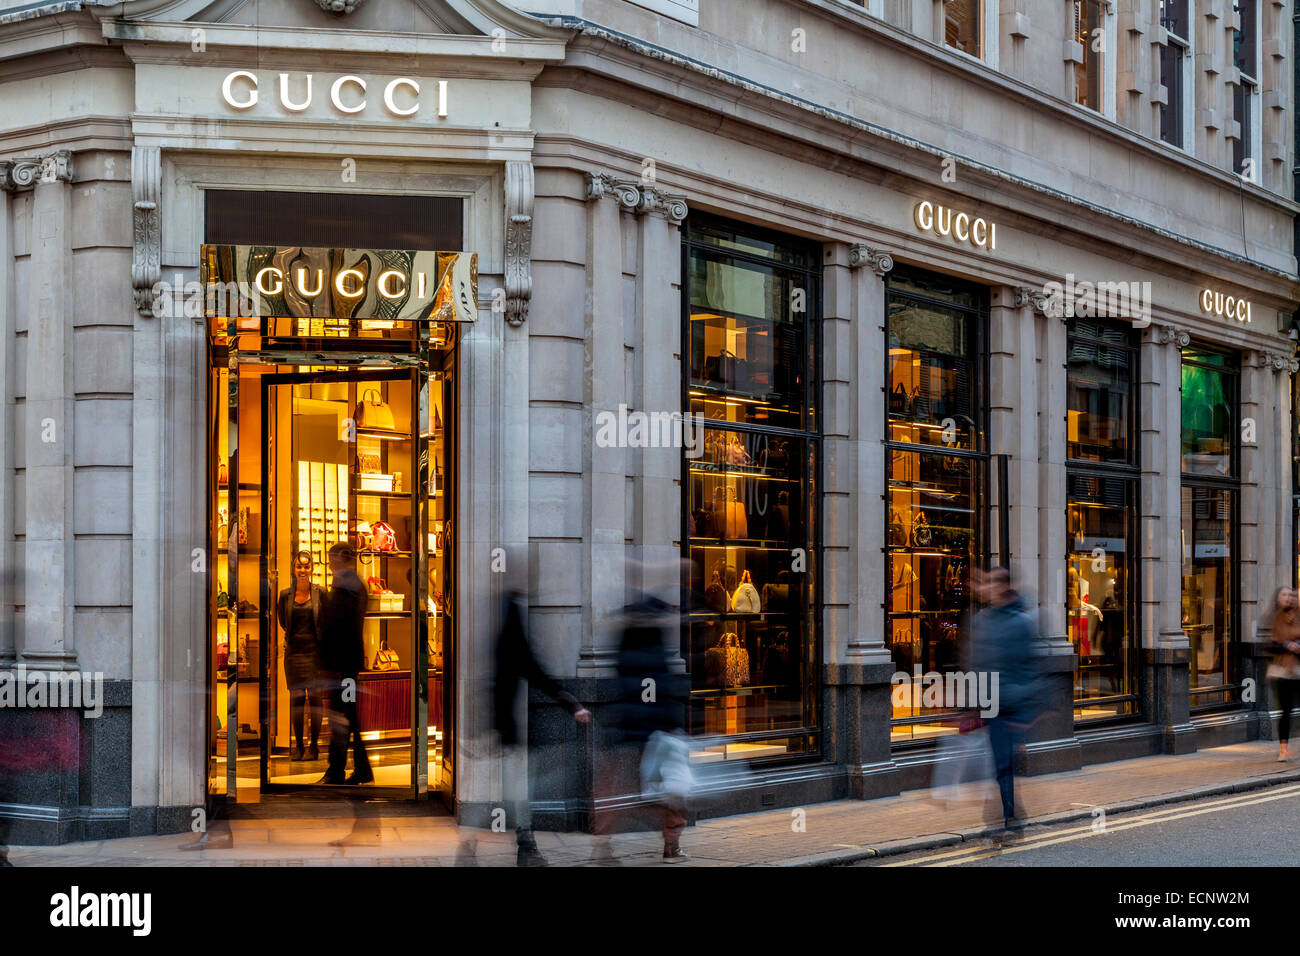 Die Gucci-Store In Old Bond Street, London, England Stockfotografie - Alamy